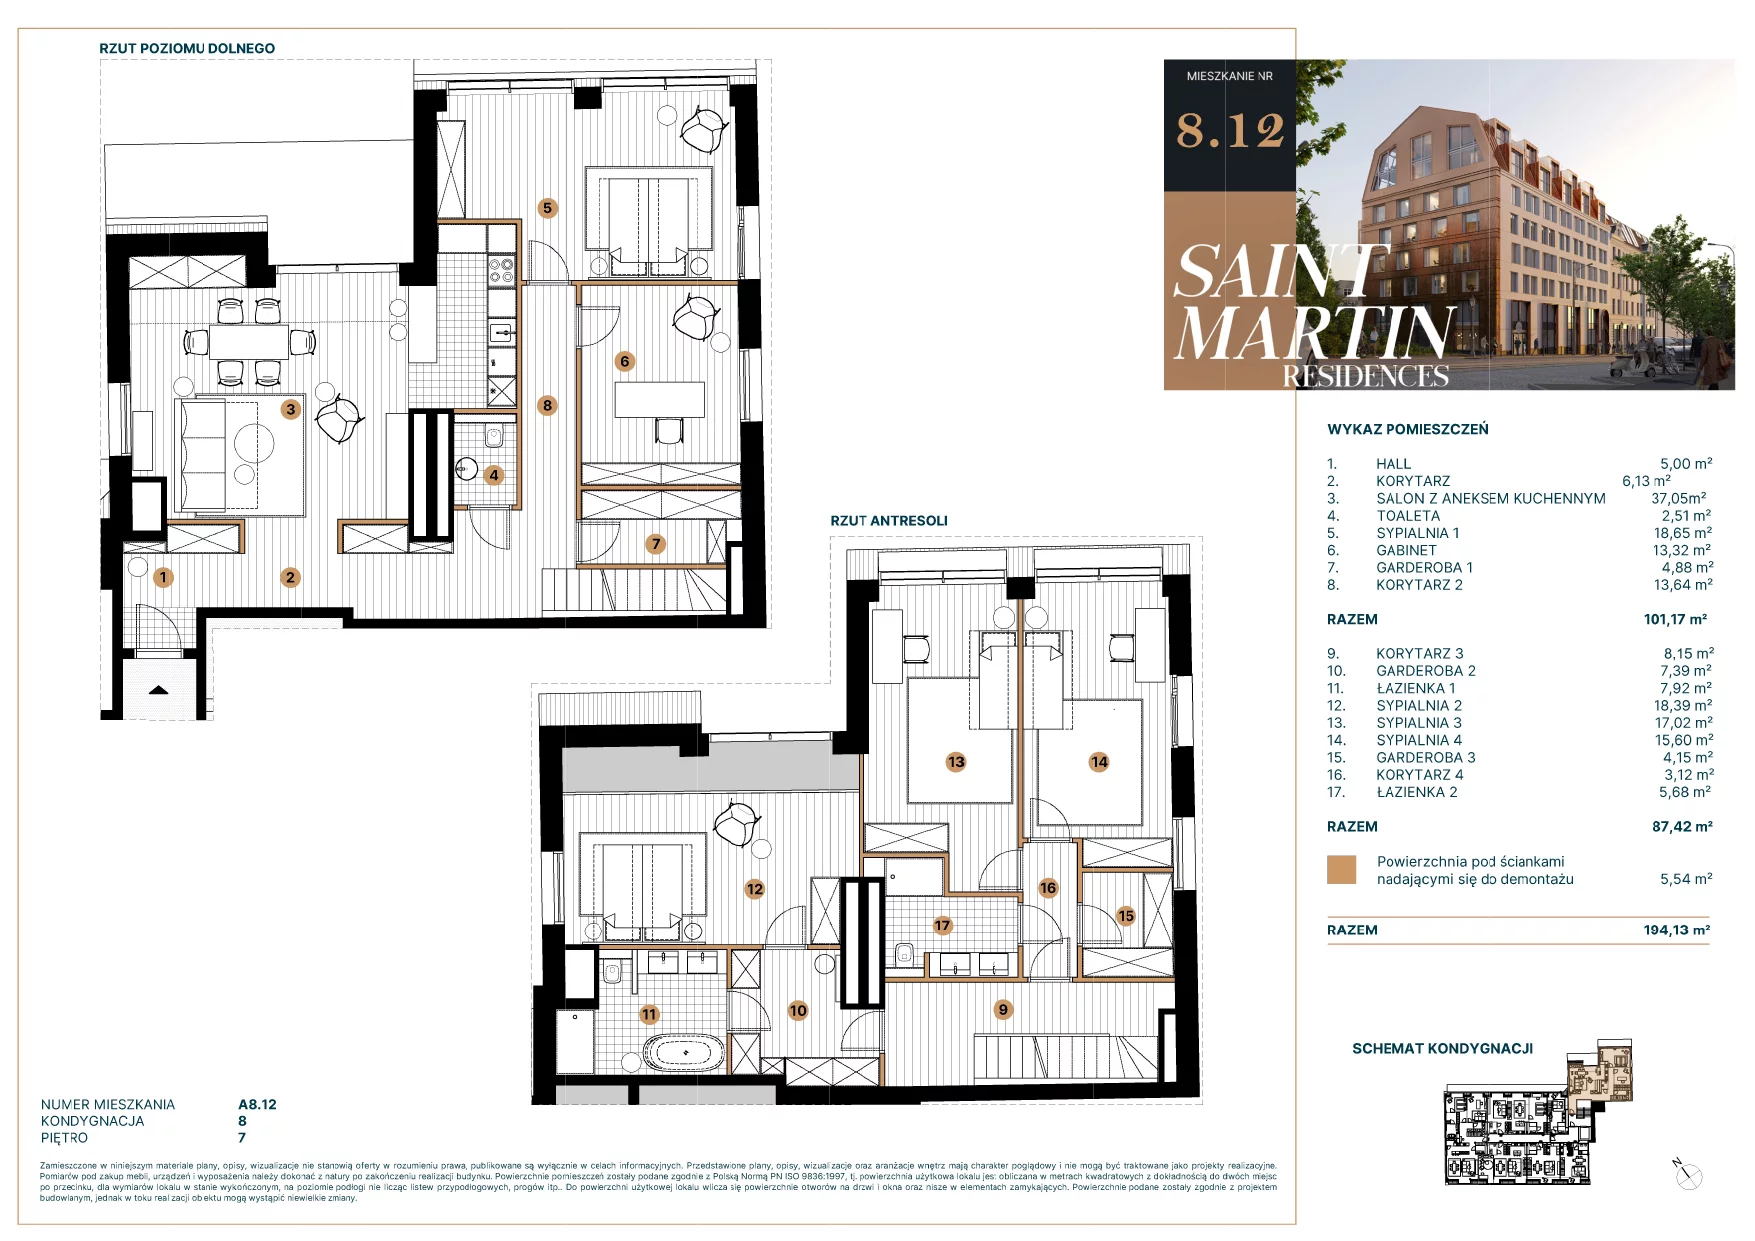 Apartament 196,58 m², piętro 7, oferta nr A8.12, Saint Martin Residences II, Poznań, Stare Miasto, Stare Miasto, ul. Podgórna 7